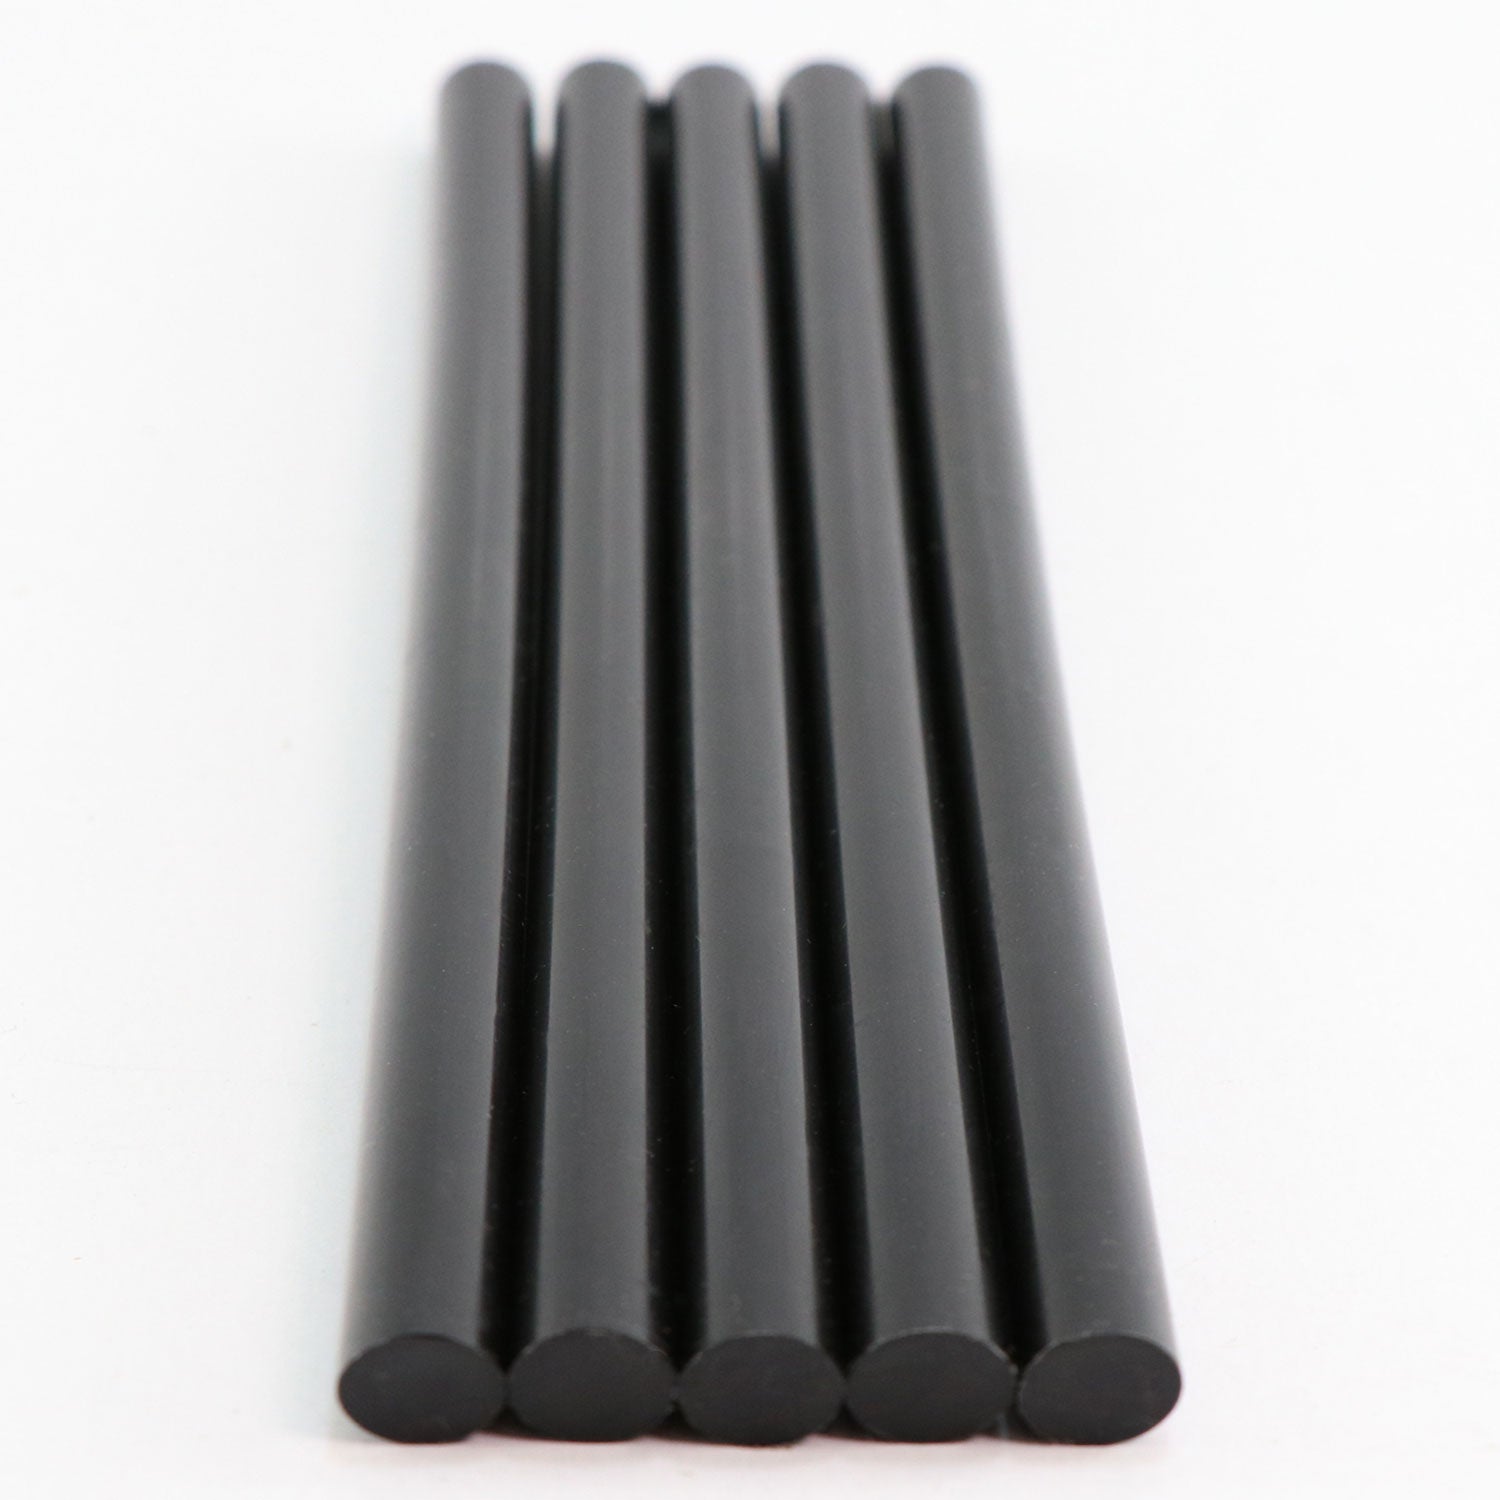 Surebonder 739R10CBlack Full Size 10 Wood Adhesive Black Hot Glue Stick - 25 lb Box